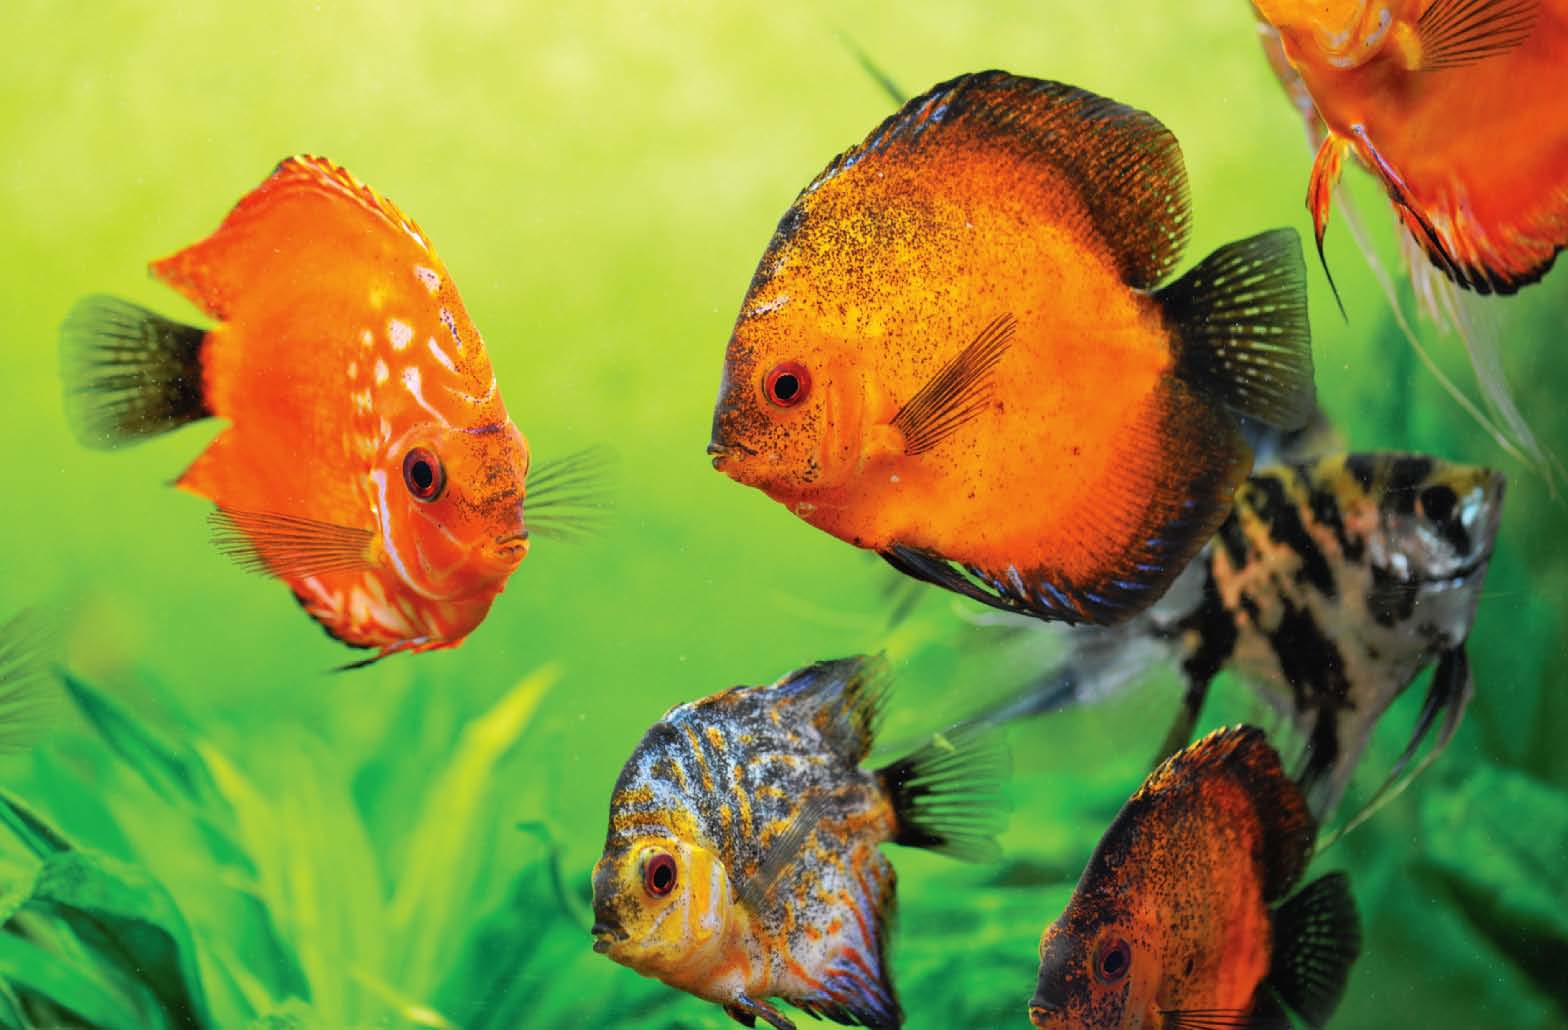 Freshwater Aquarium Disease Prevention, Recognition and Treatment